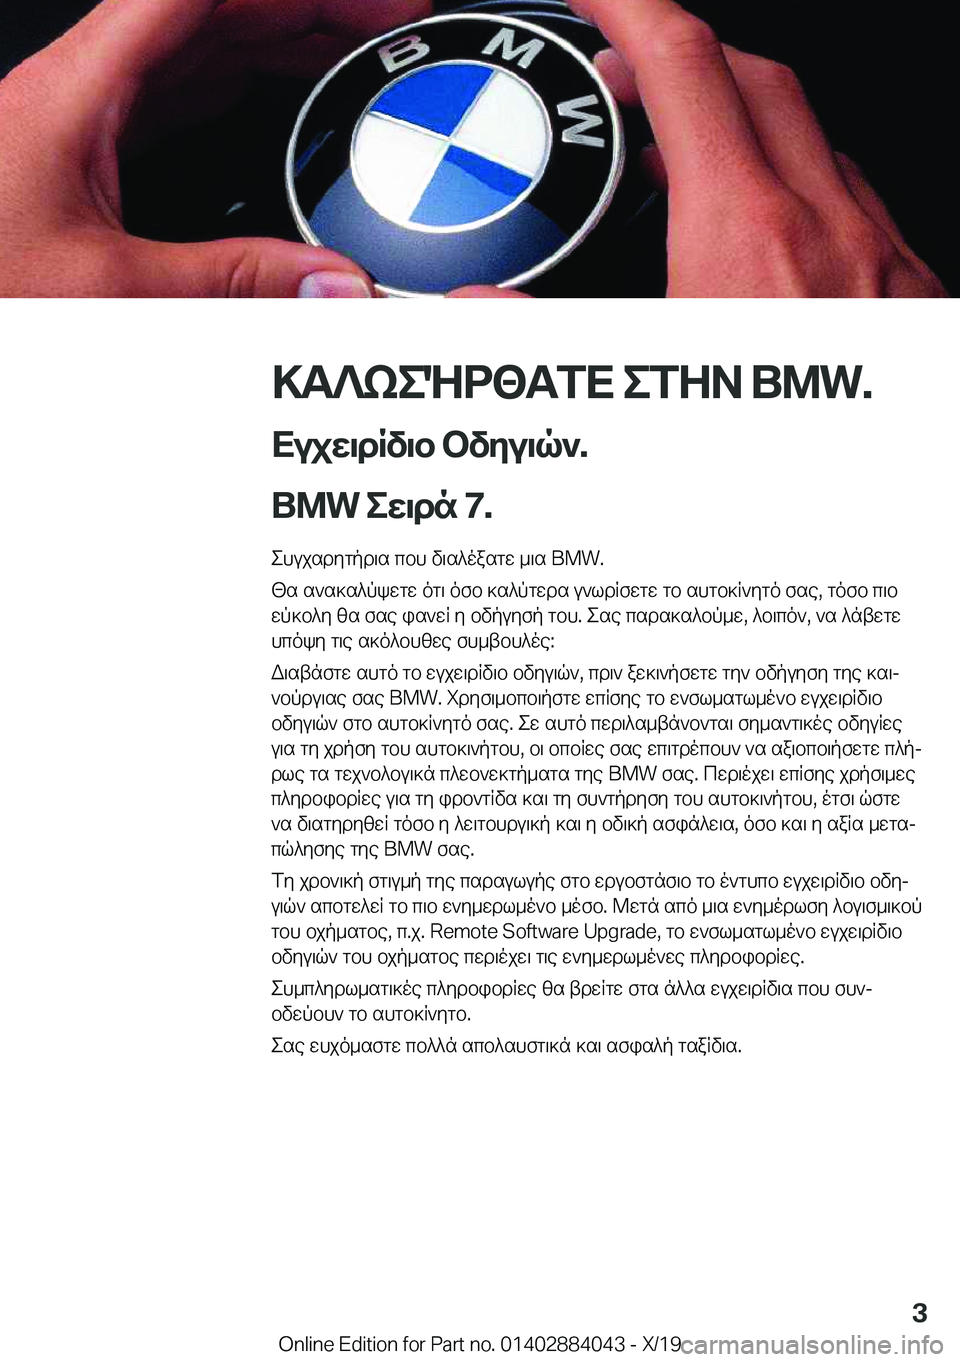 BMW 7 SERIES 2020  ΟΔΗΓΌΣ ΧΡΉΣΗΣ (in Greek) >T?keNd<TfX�efZA��B�M�W�.
Xujw\dRv\b�bvyu\q`�.
�B�M�W�ew\dn��7�. ehujsdygpd\s�cbh�v\s^oasgw�_\s��B�M�W�.
[s�s`s]s^pk